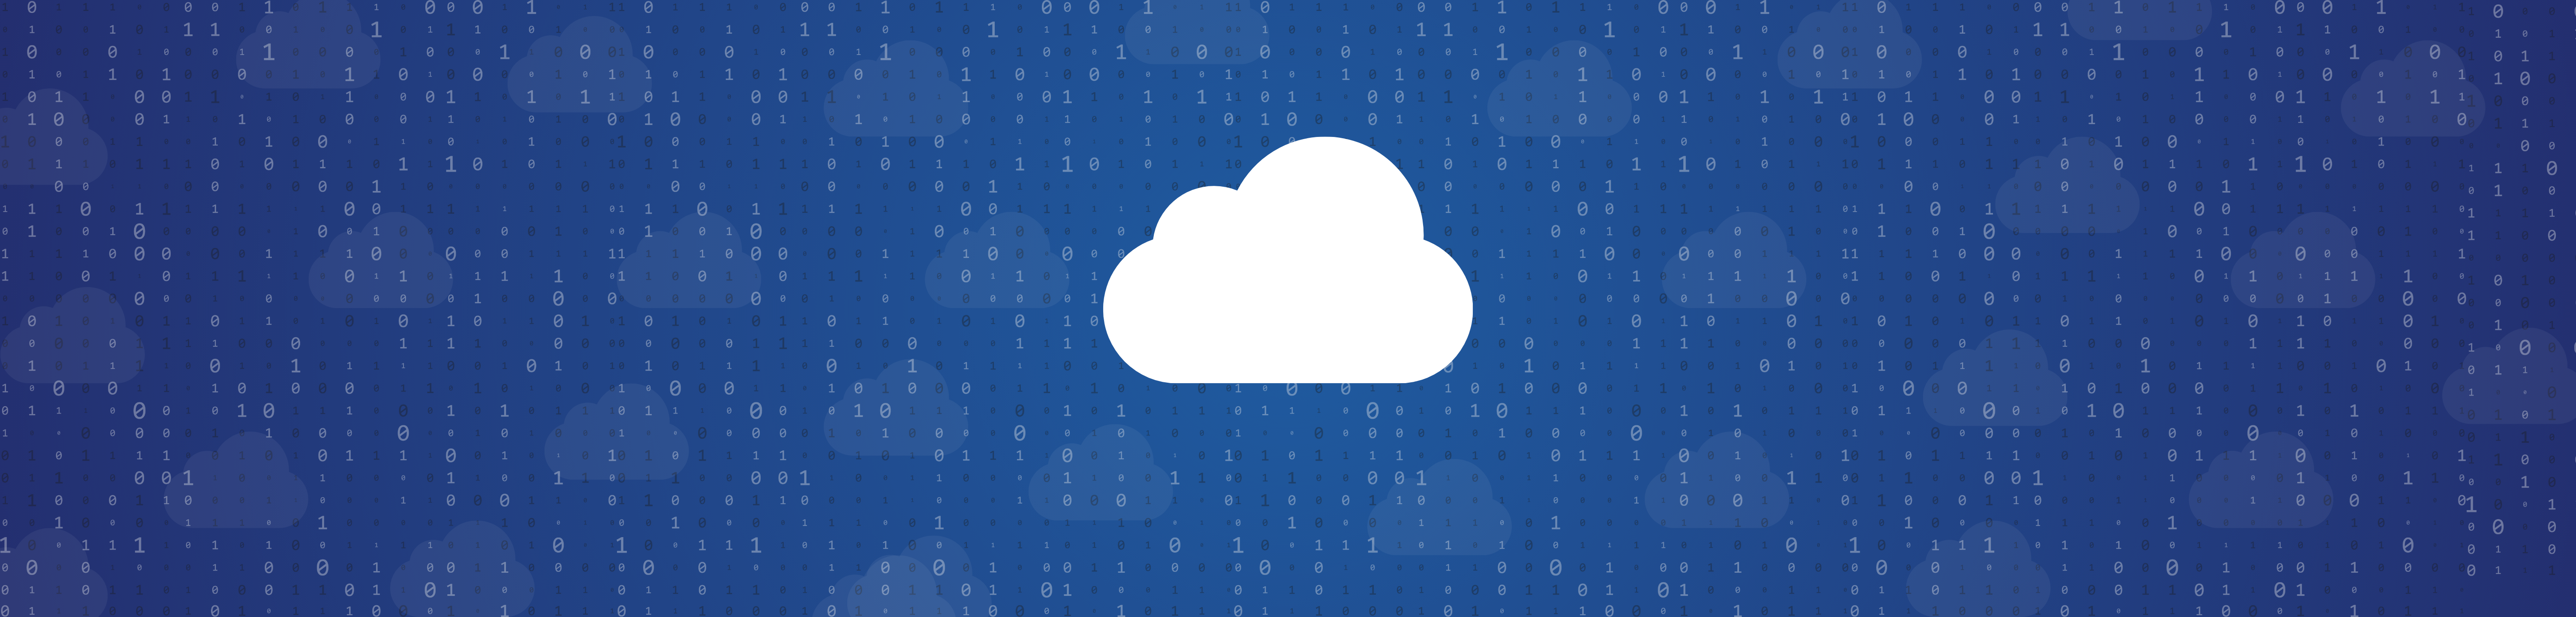  Microsoft cloud computing essentials featured image